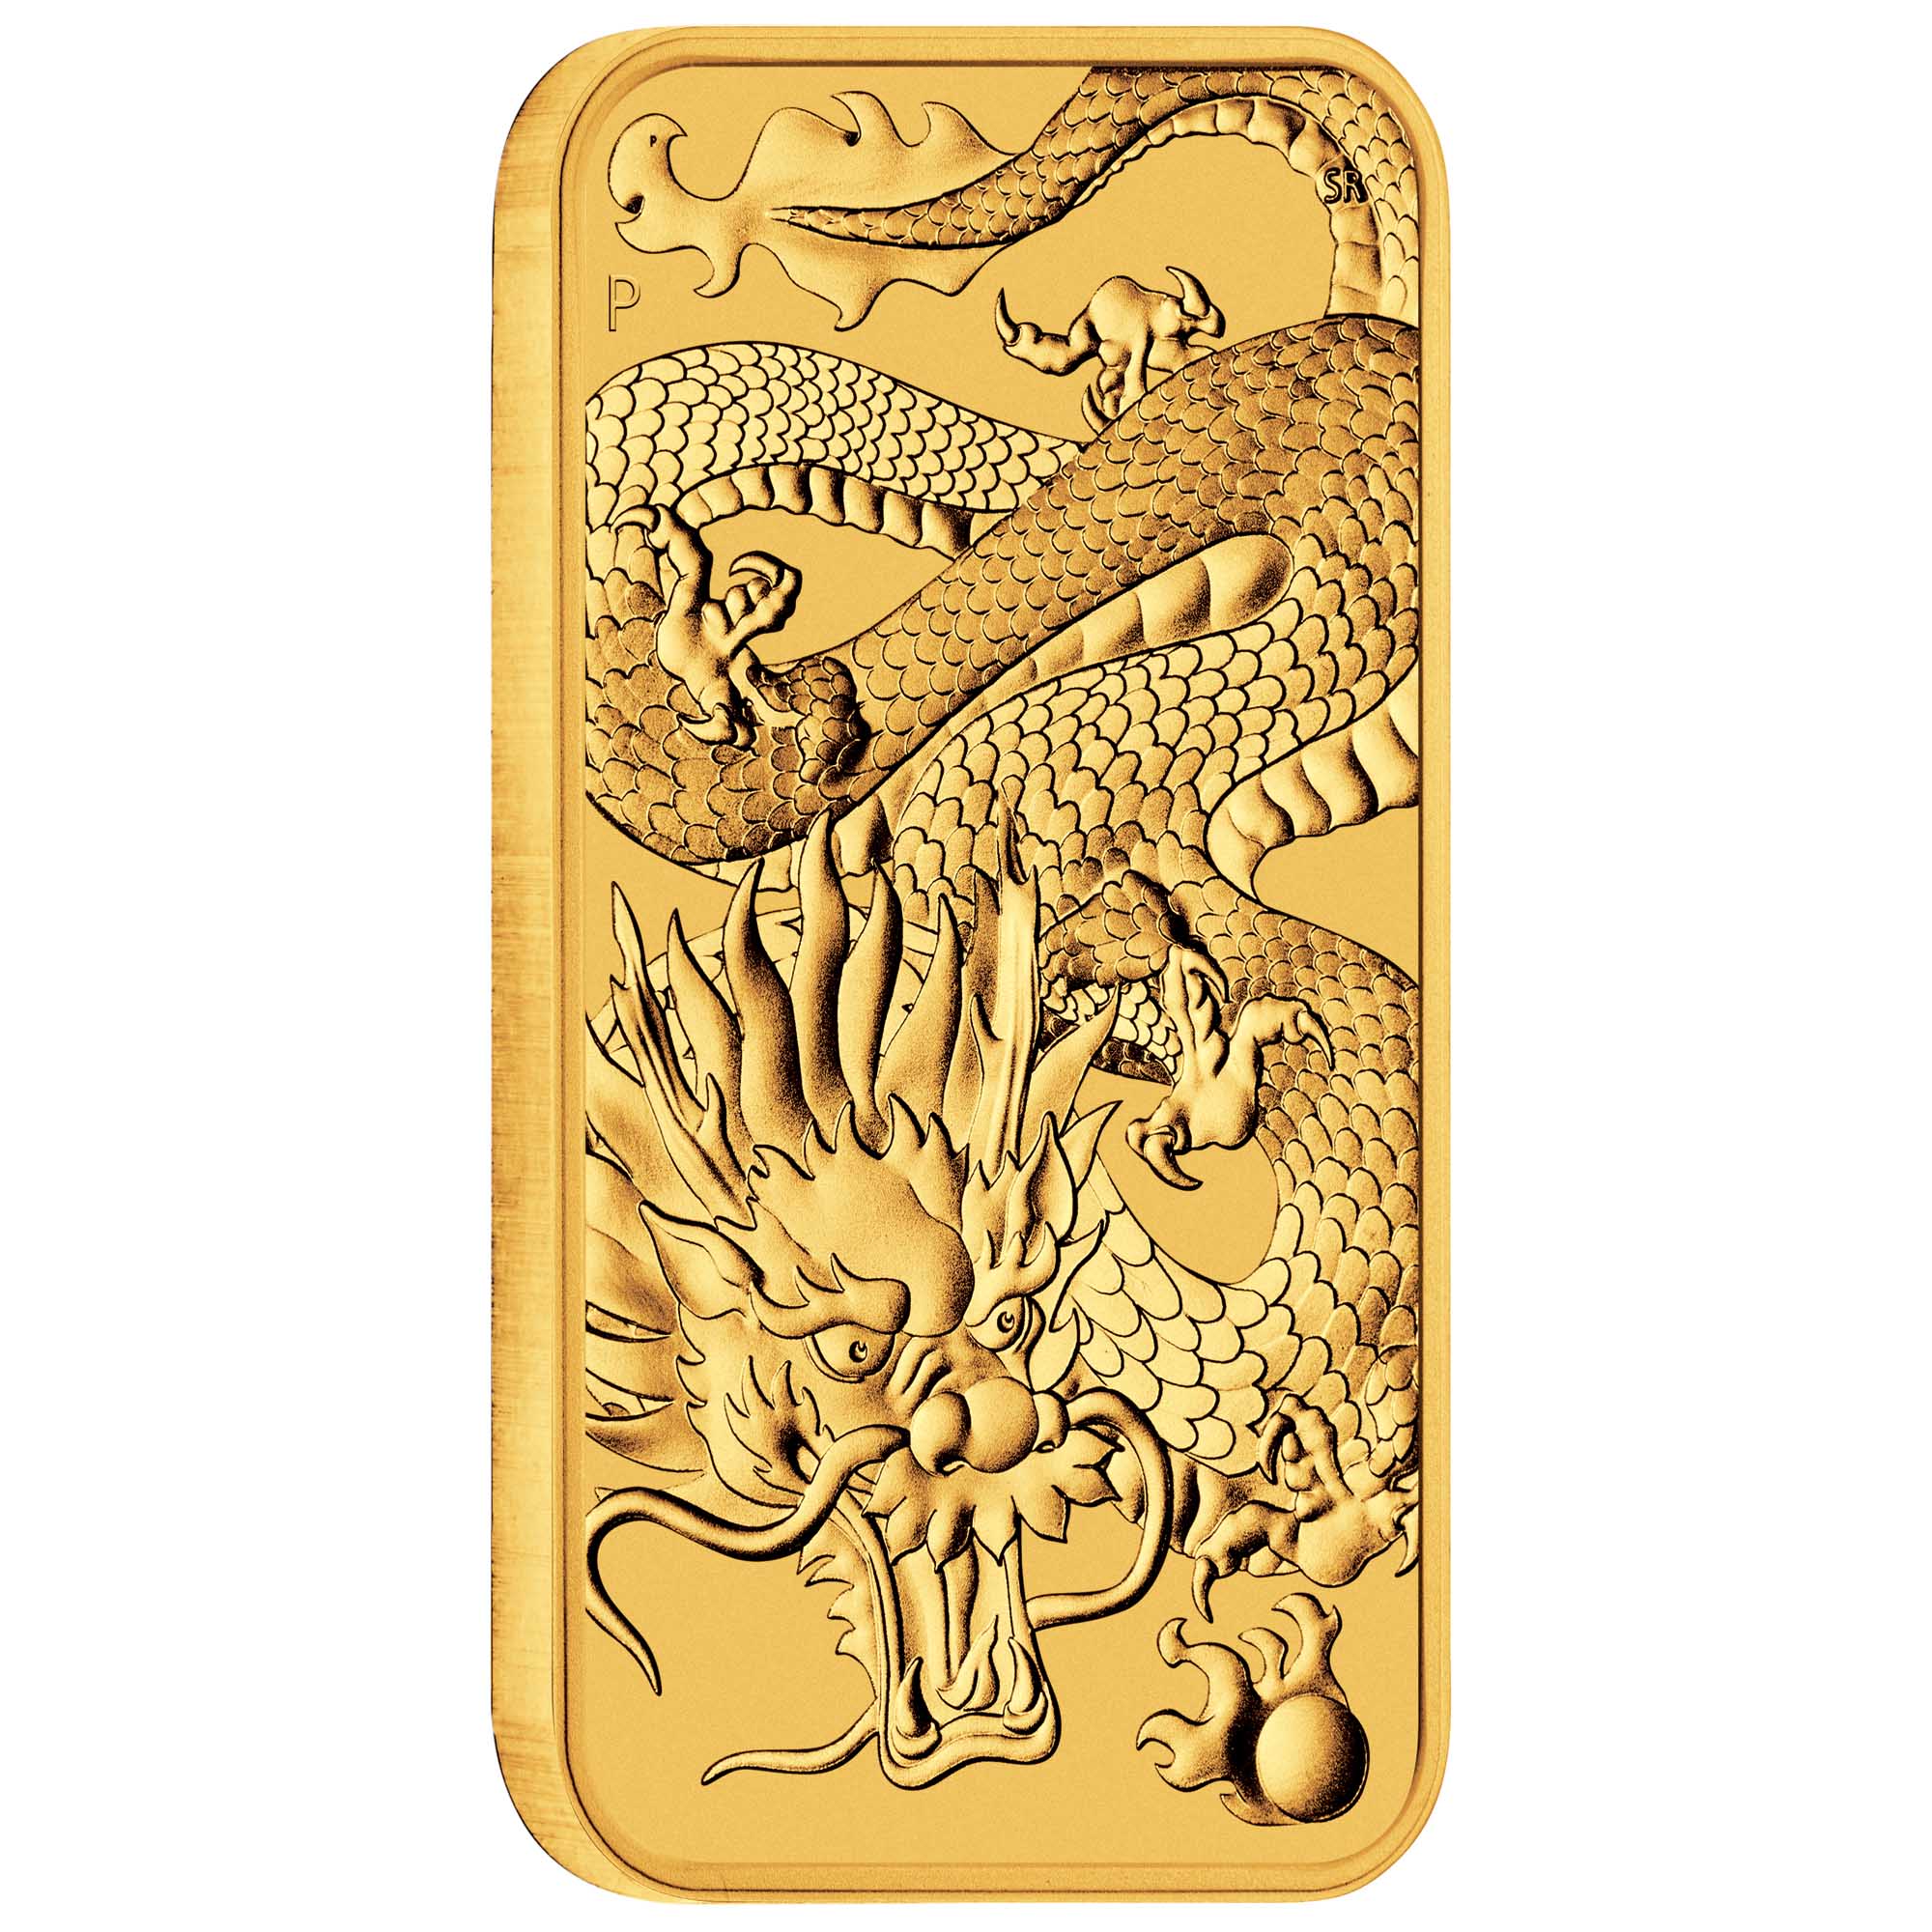 01 2022 rectangulardragon 1oz gold bullion onedge highres